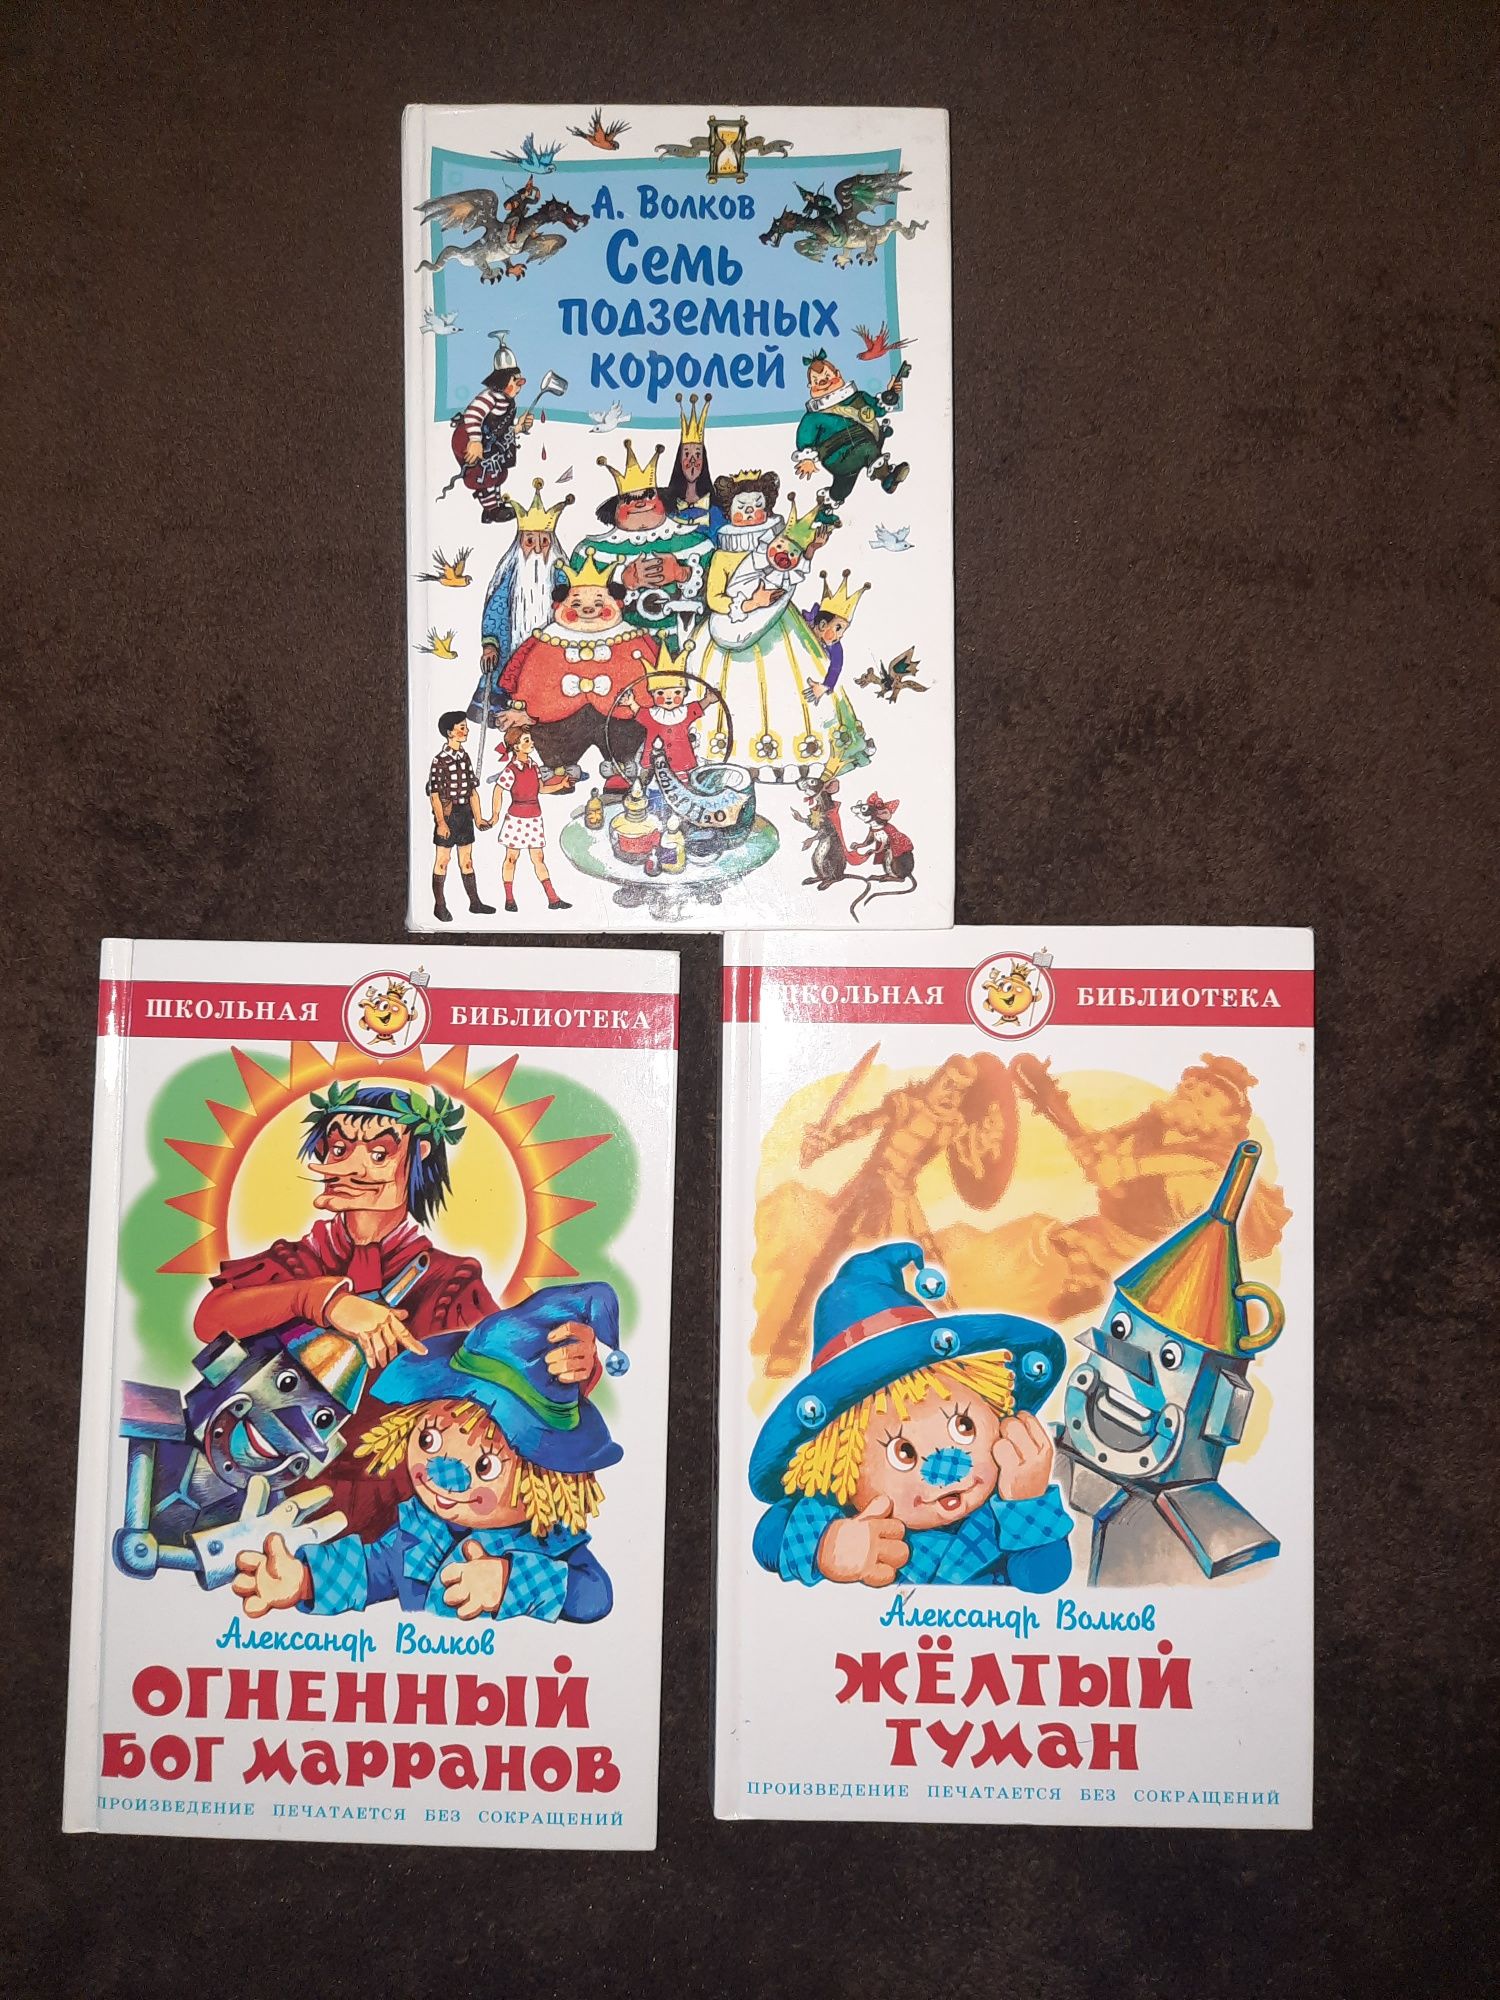 Дитячі книжки В.Нестайко, О.Генрі, О.Волков, Д.Стронг